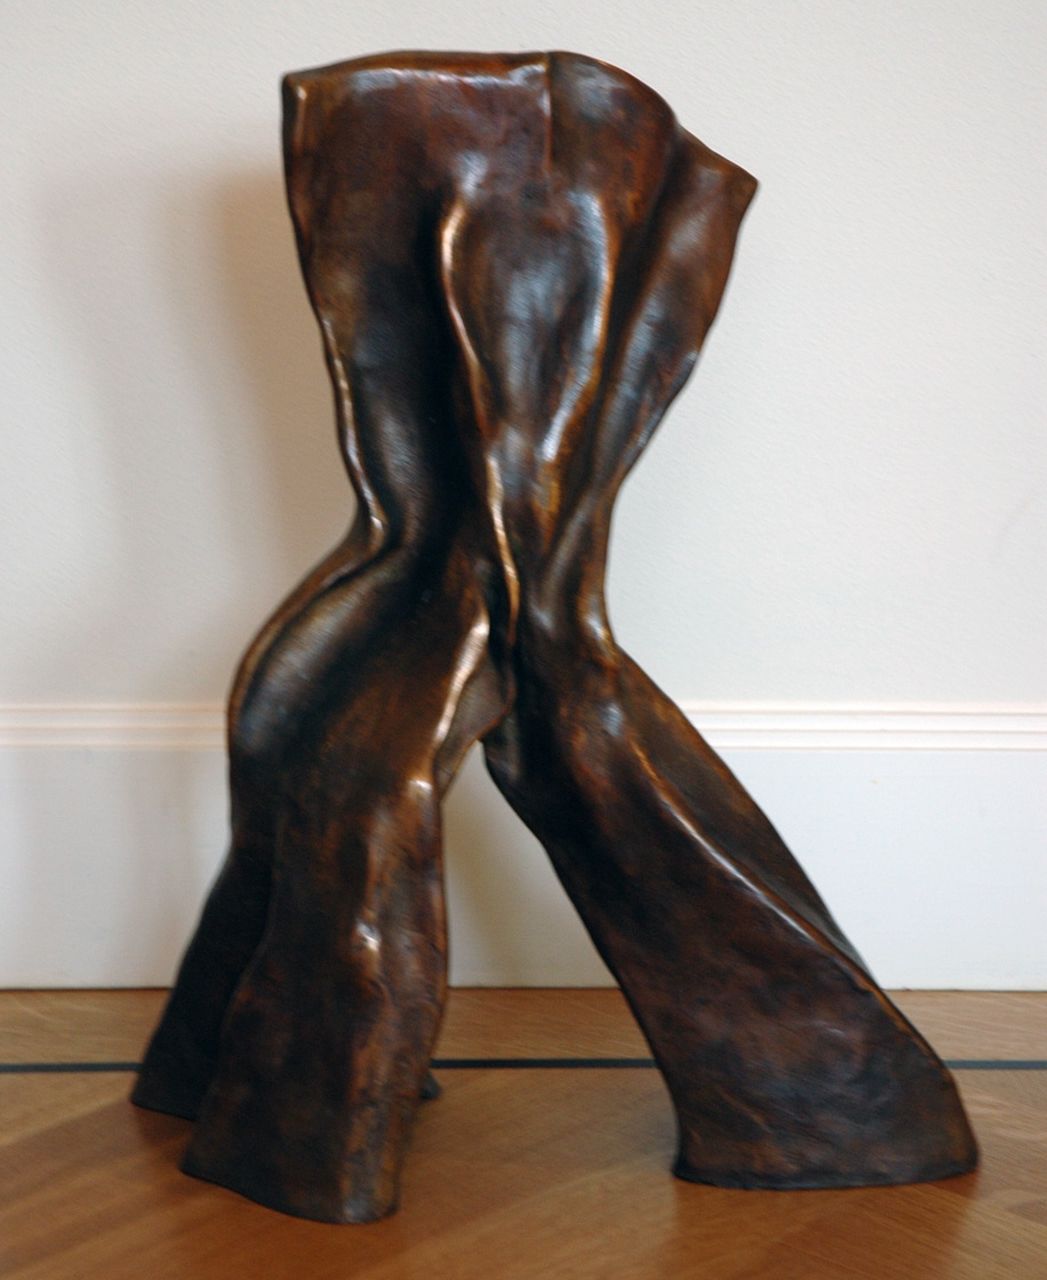 LeRoy A.  | Antoinette LeRoy, Venus II, bronze 42.3 x 32.0 cm, signed on lower backside